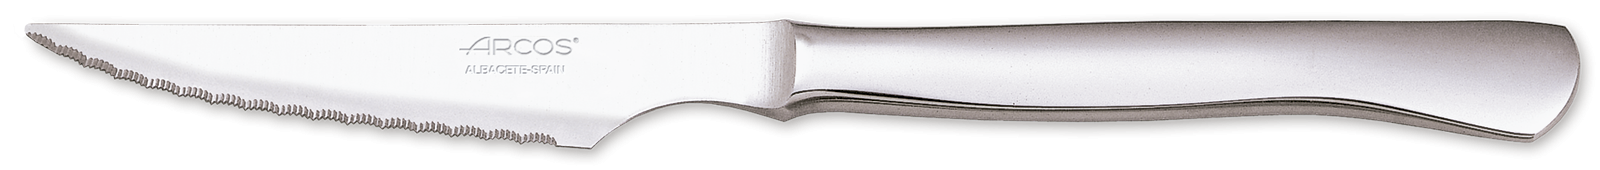 Cuchillo de mesa para carne Arcos Inox 11cm - Lamenajeria